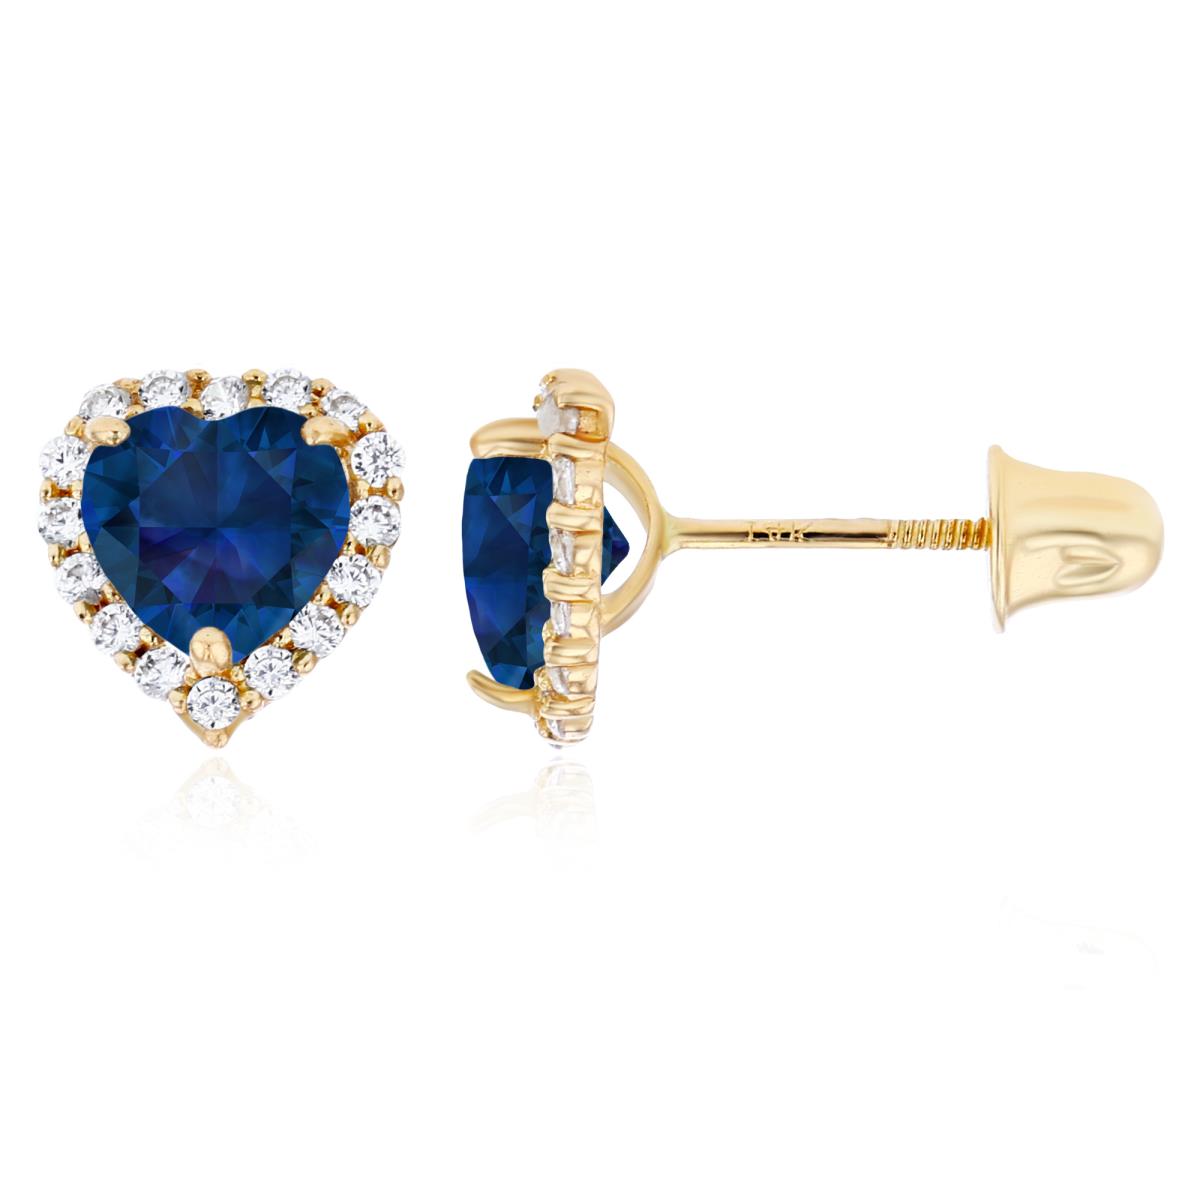 14K Yellow Gold 5mm Heart Created Blue Sapphire & 1mm Created White Sapphire Halo Screwback Earrings